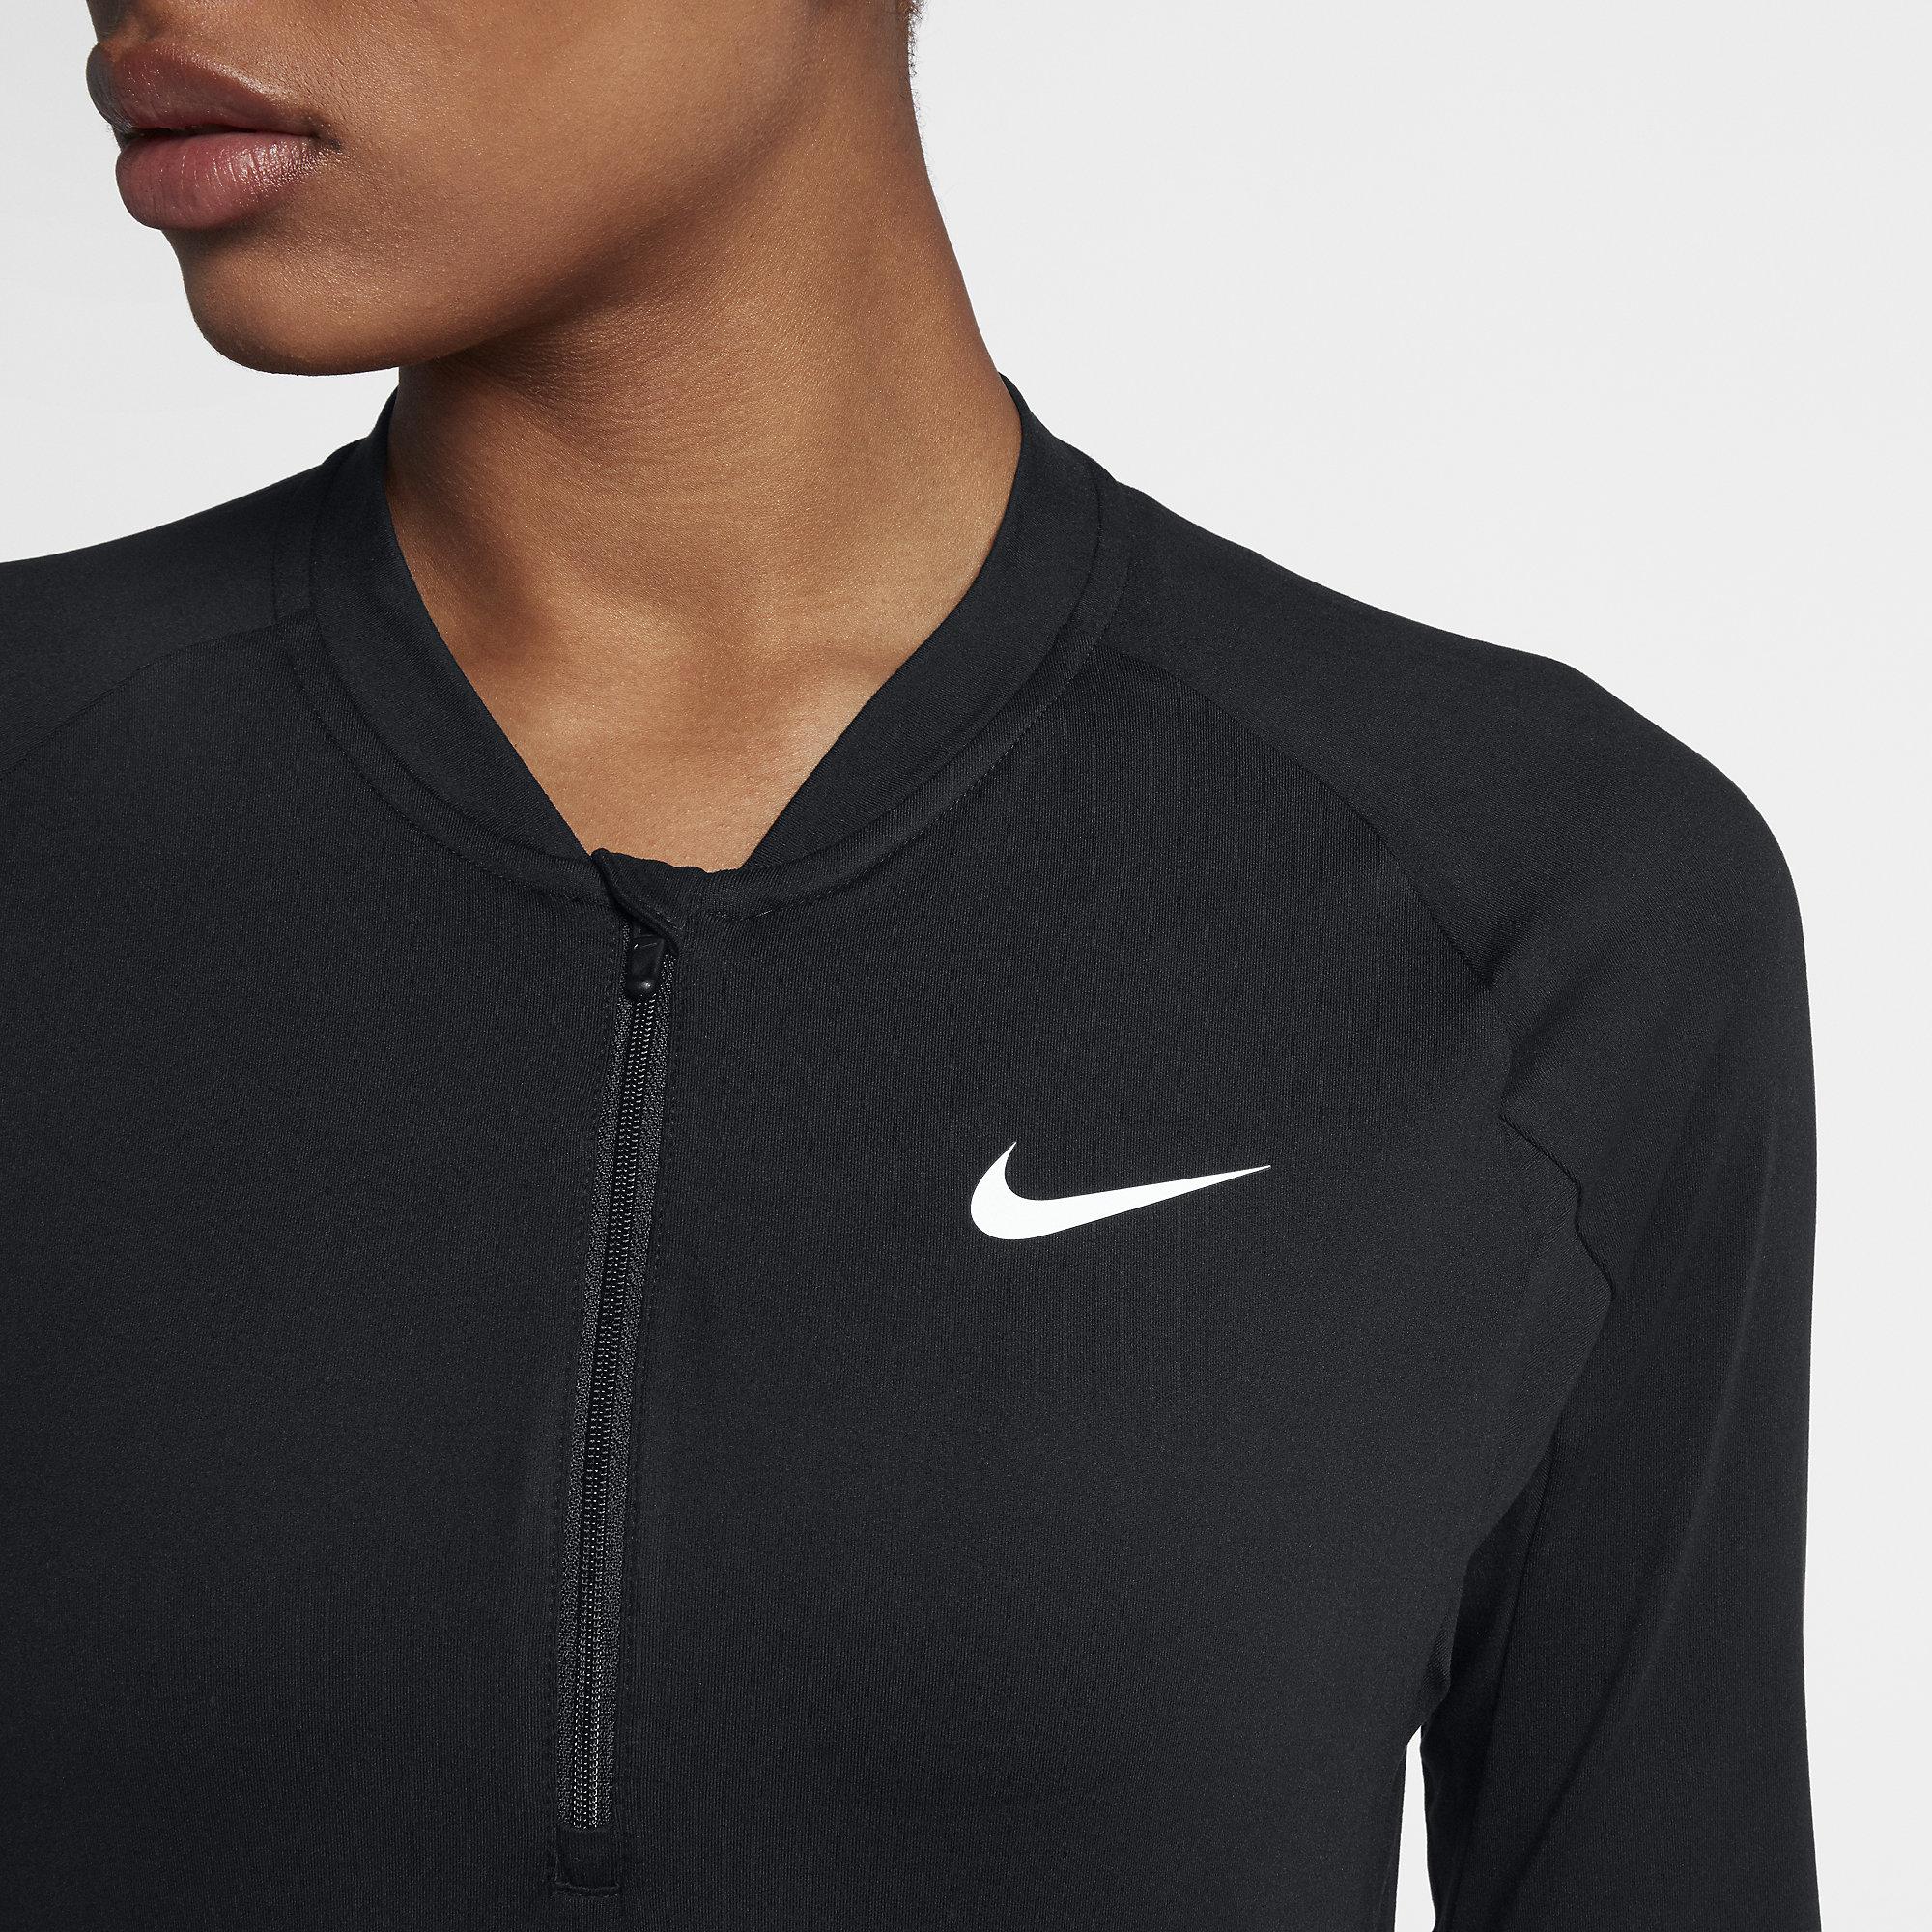 Nike Womens Pure Half-Zip Tennis Top - Black/White - Tennisnuts.com